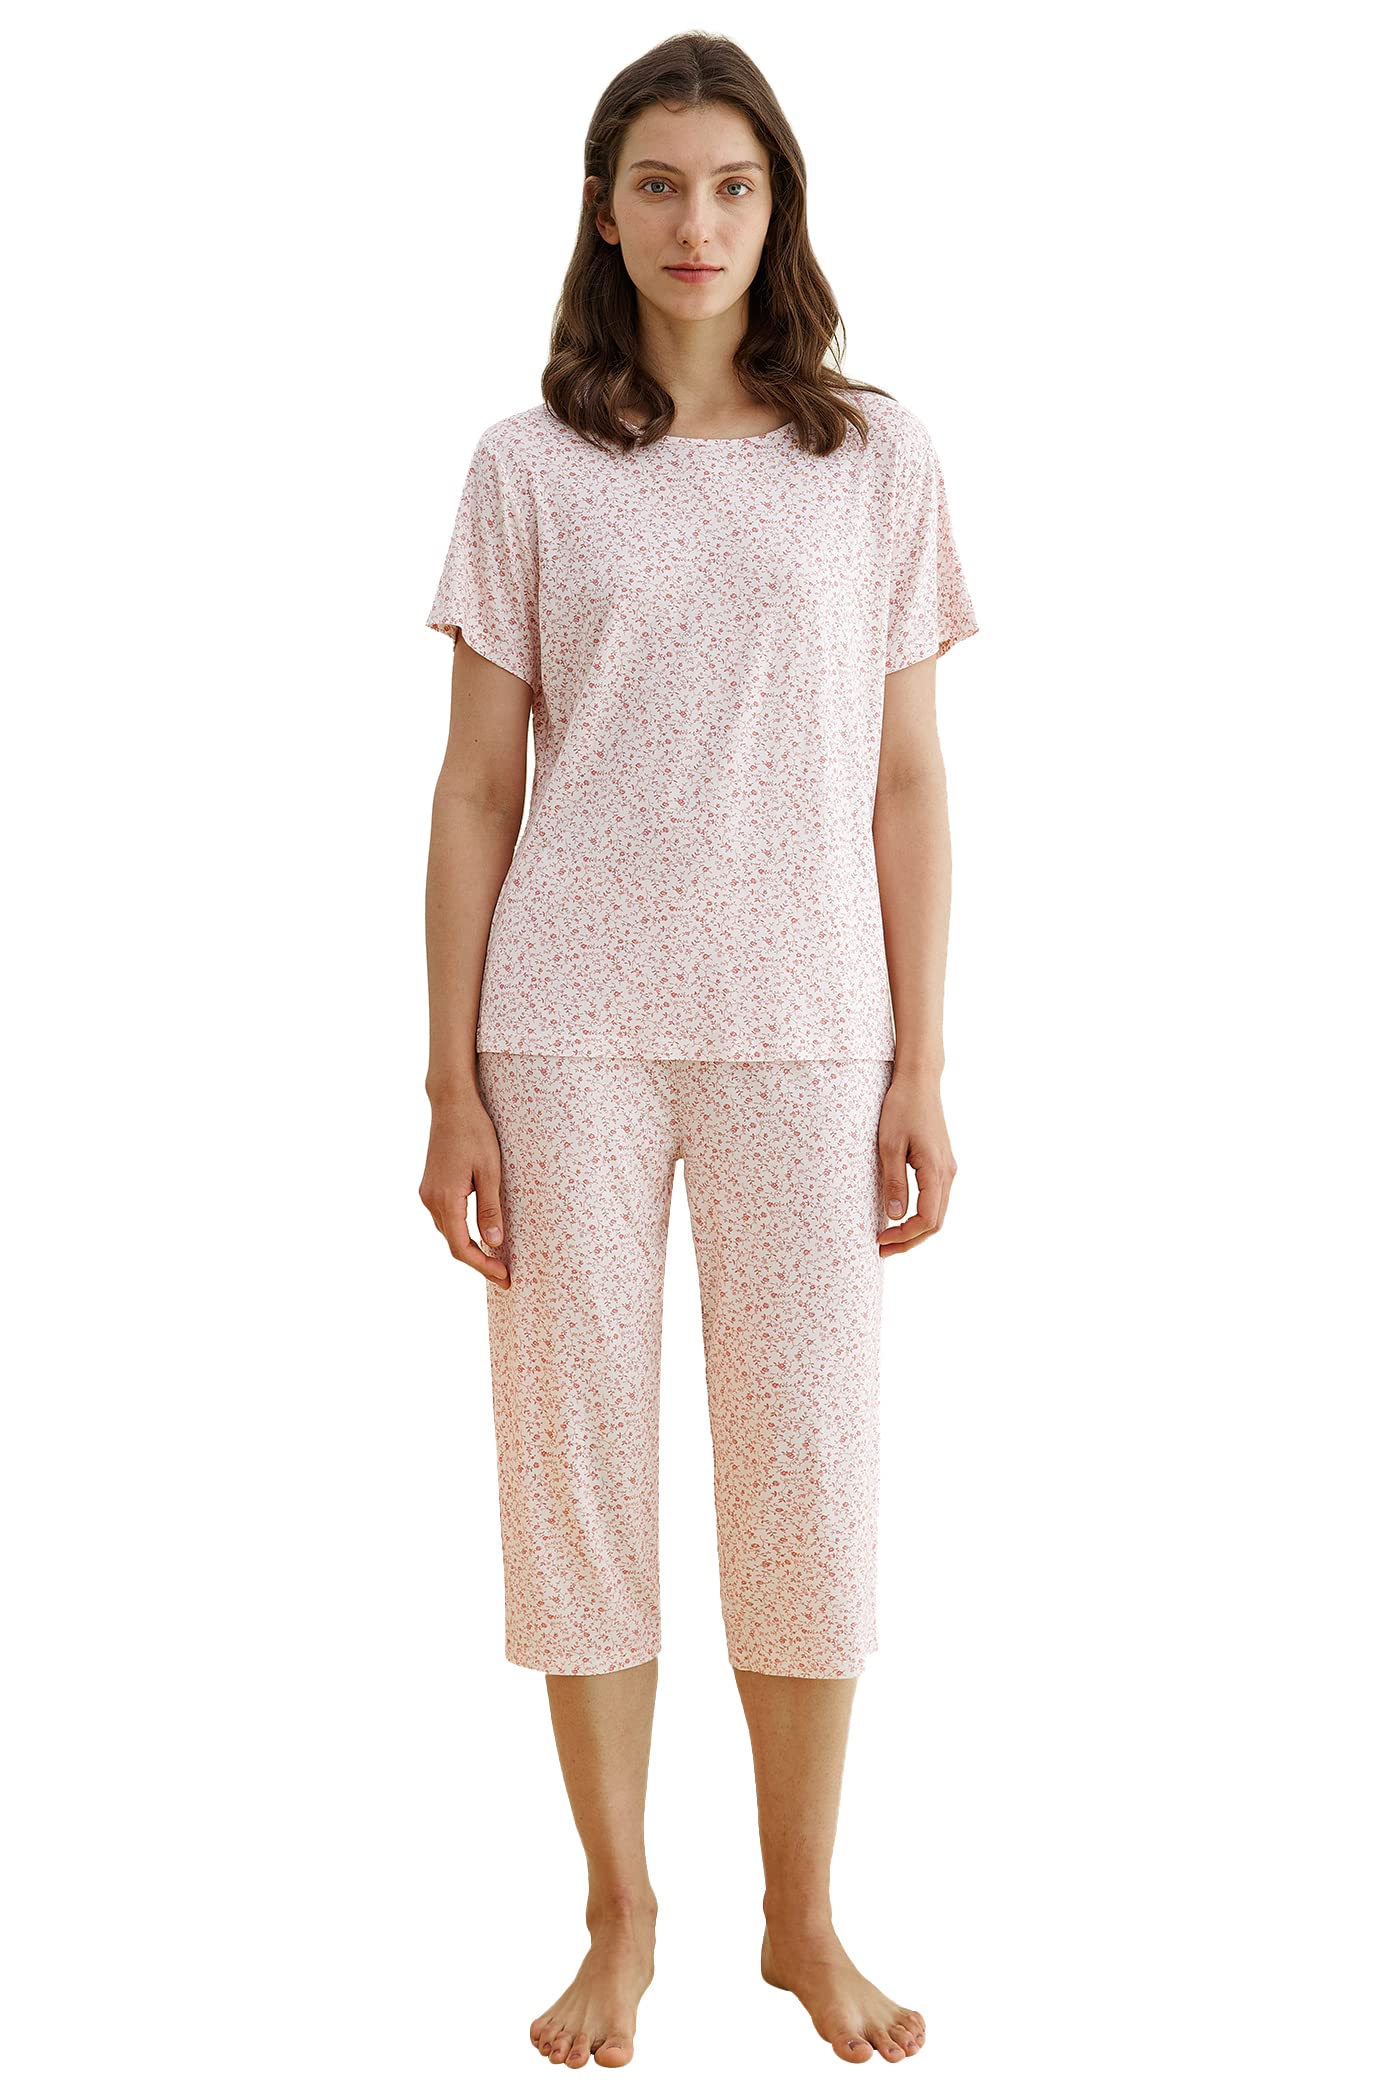 Charter Club Women's Cotton Printed Capri Sleep Pants Color Floral